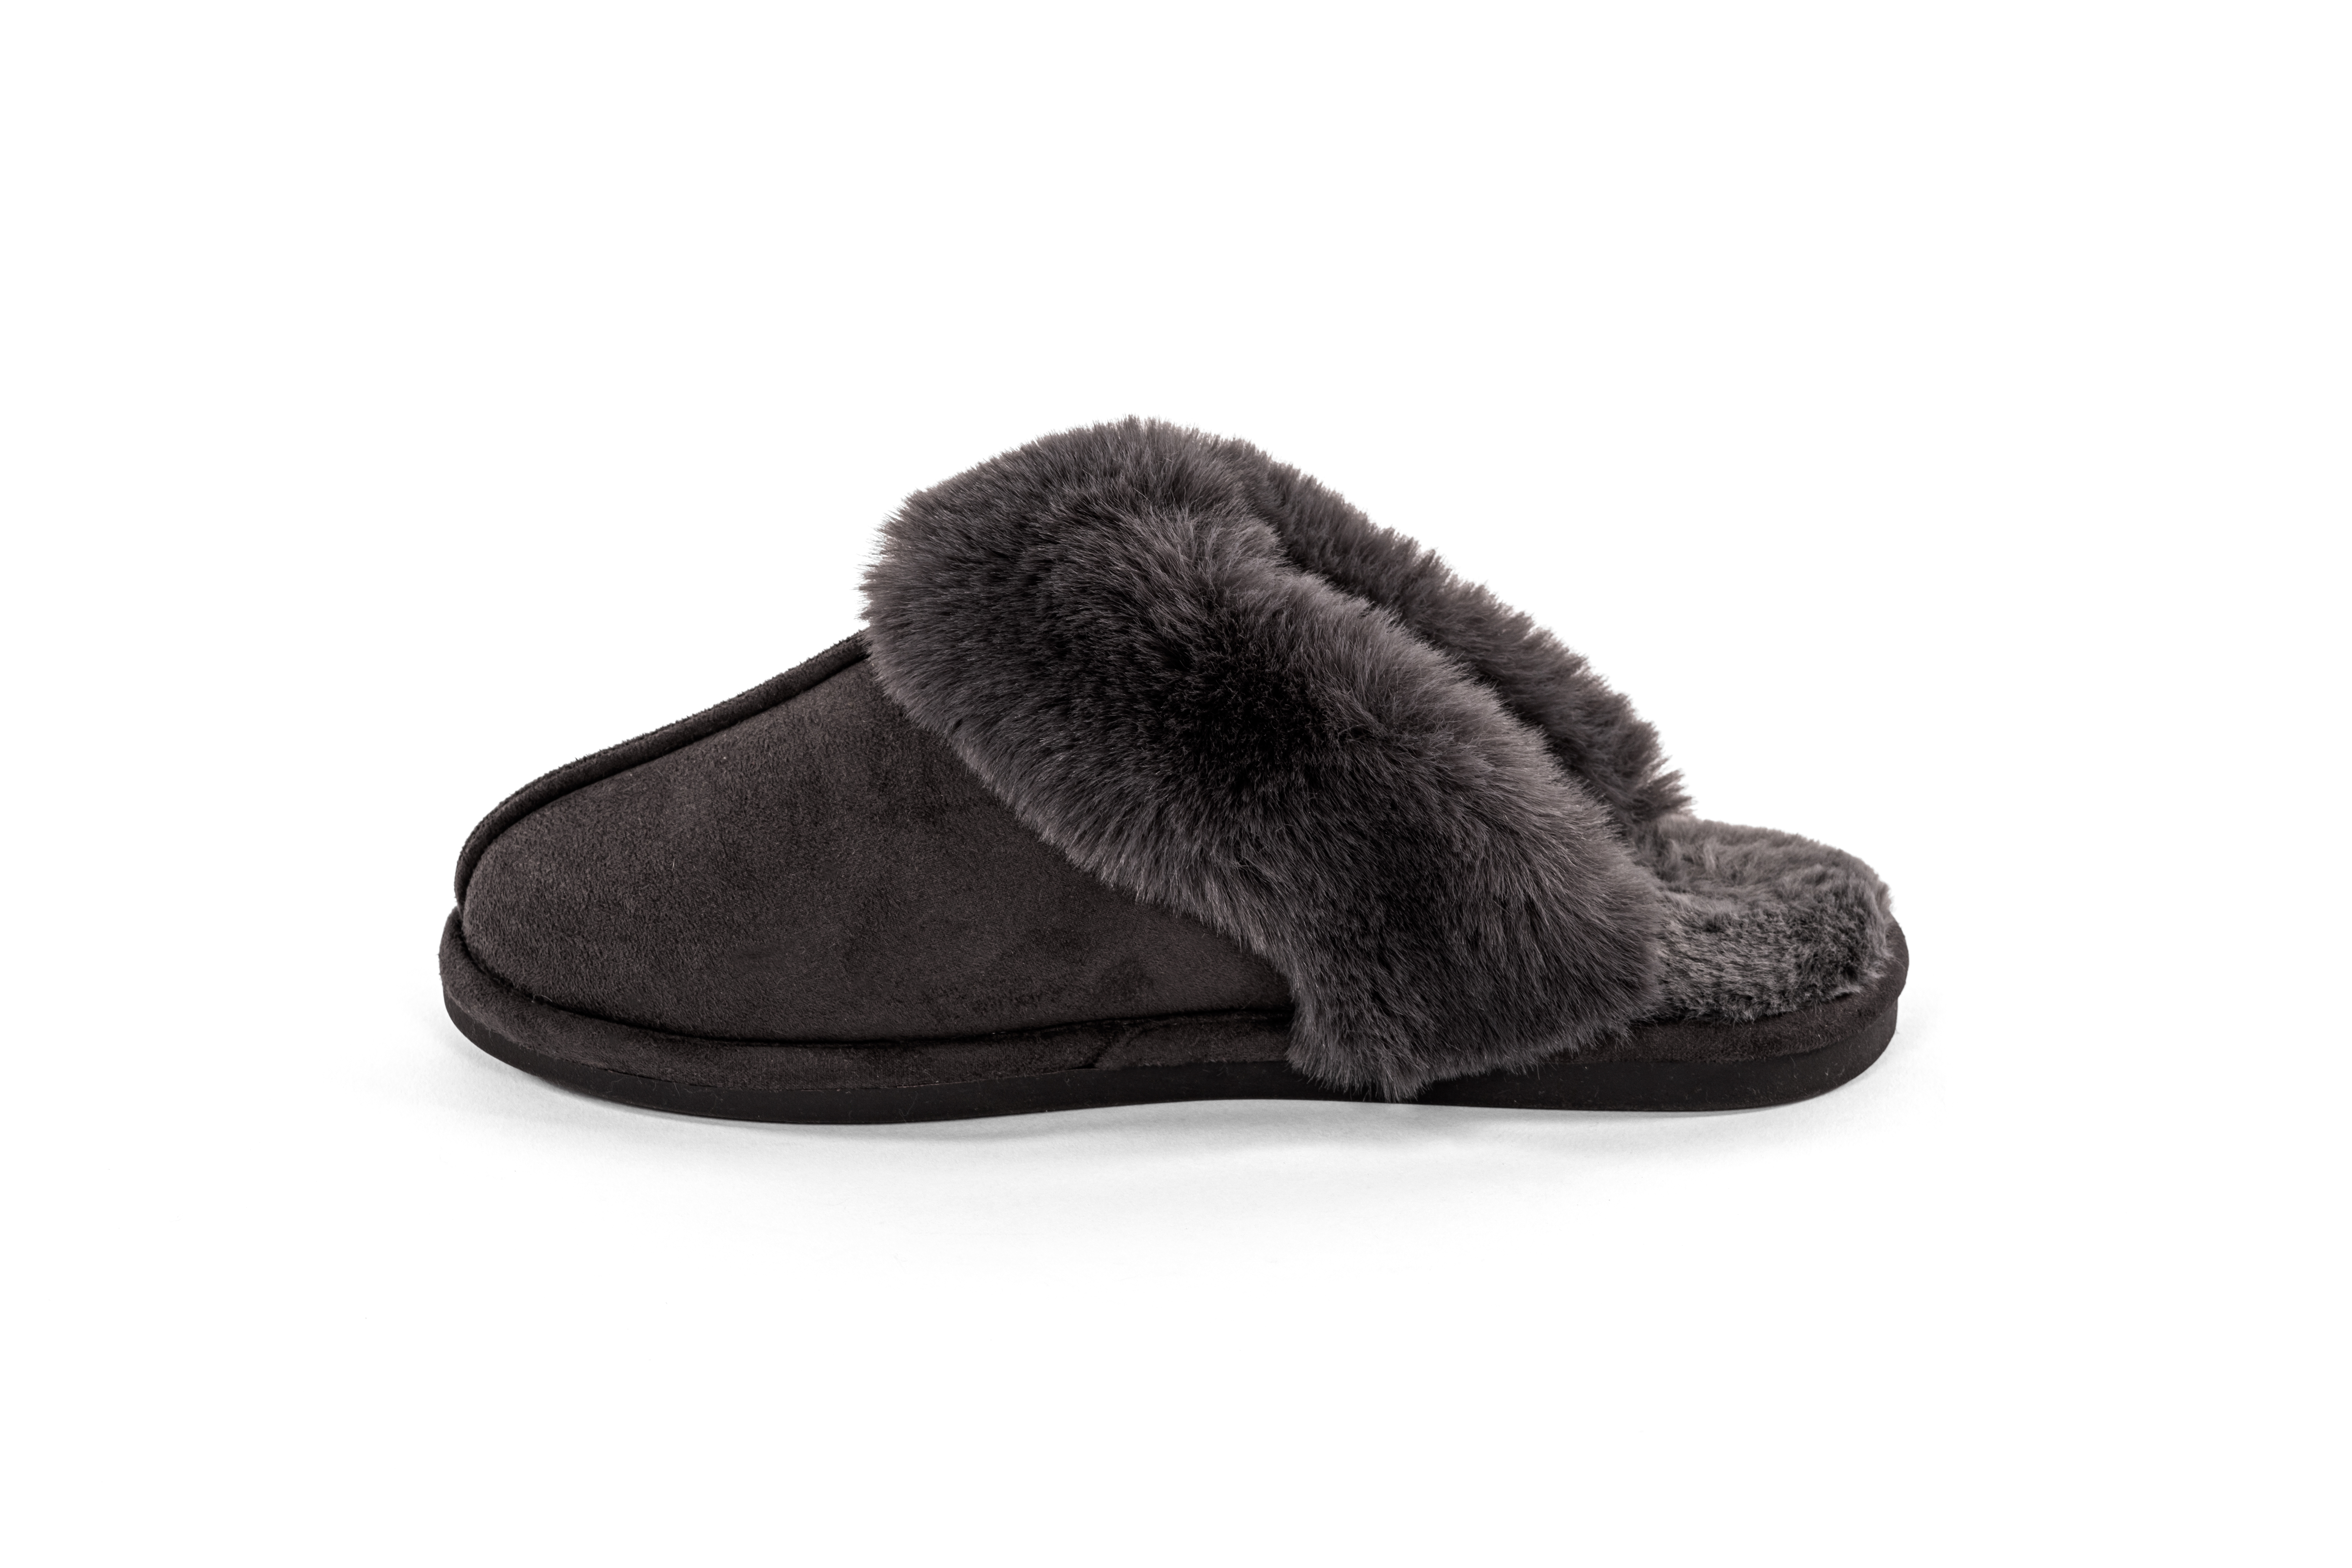 Suede slippers SNUGGS 36/37, black